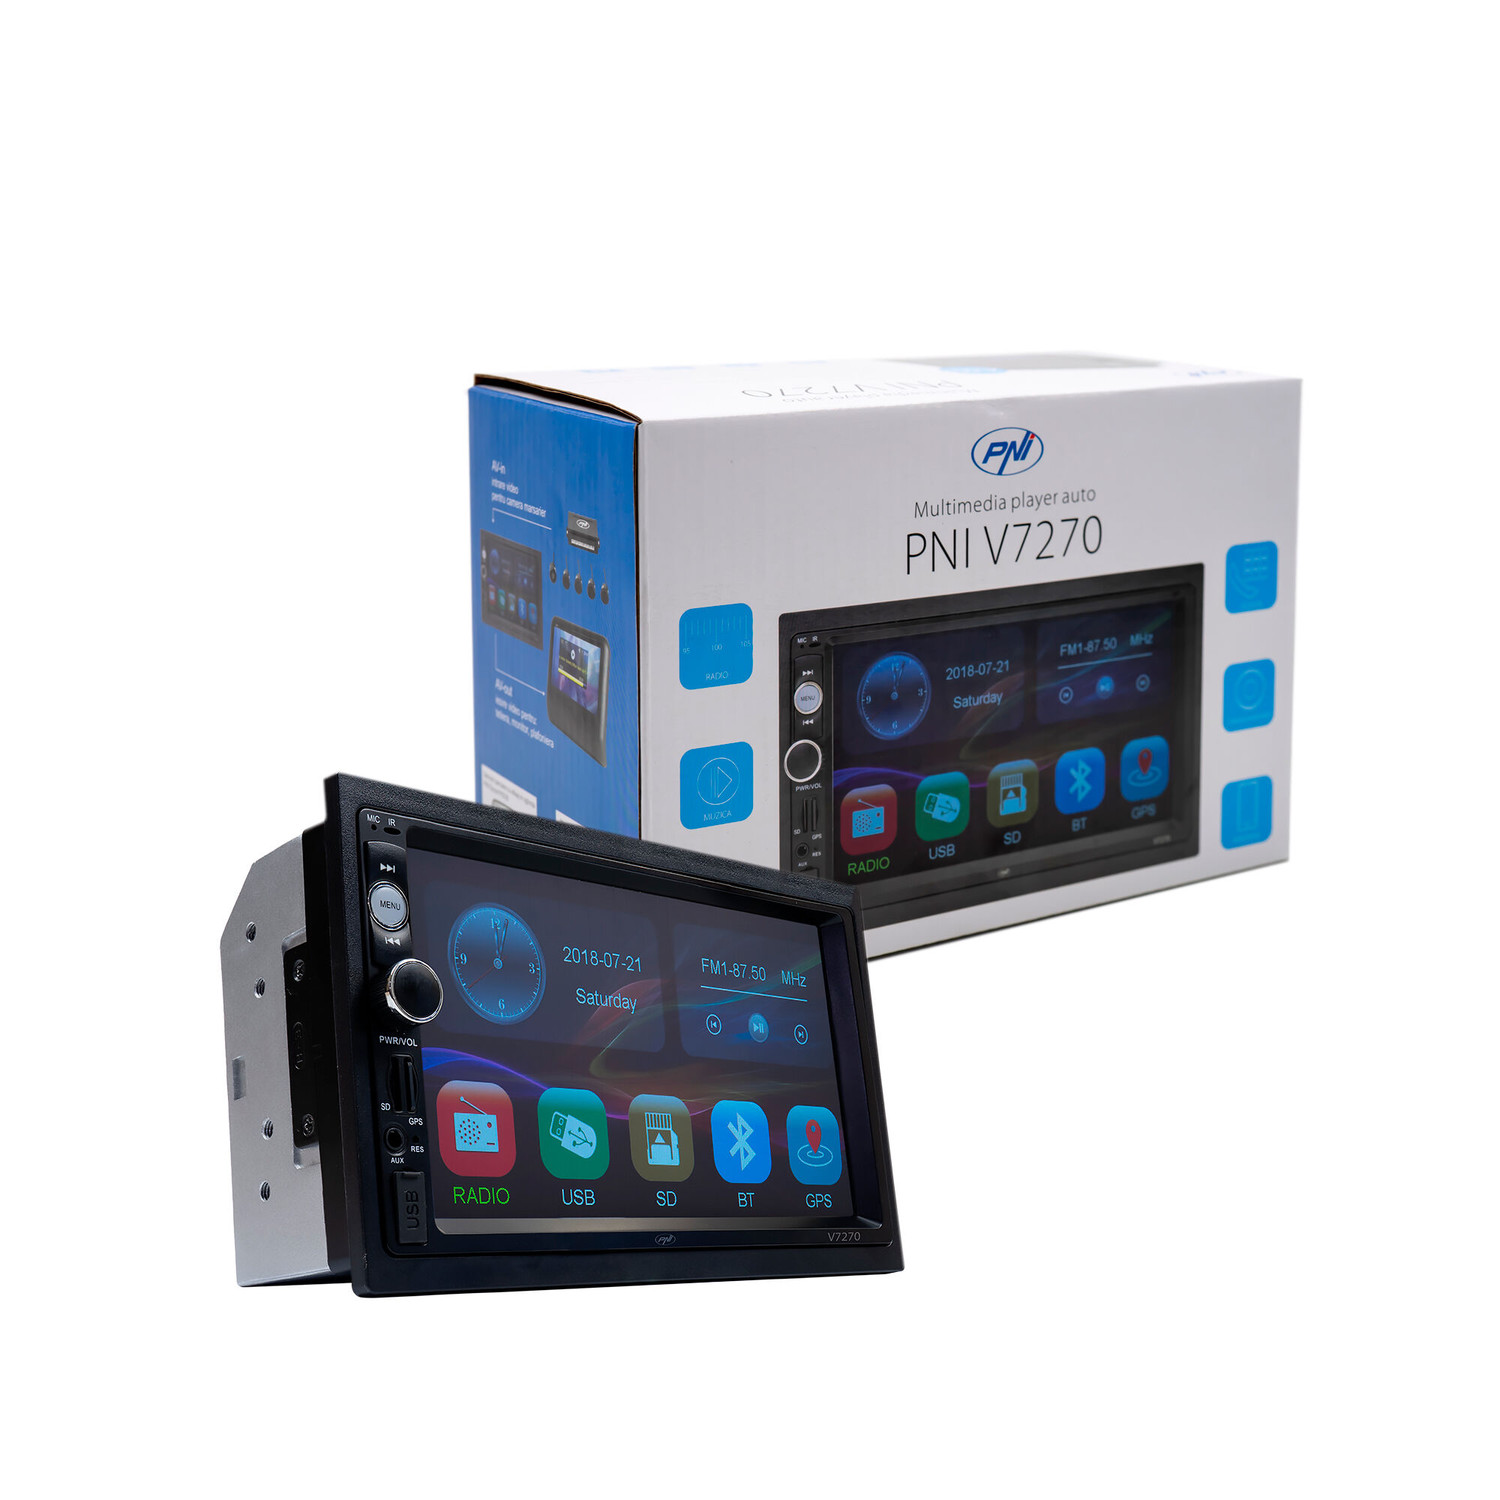 Navigatie multimedia PNI V7270 2 DIN cu GPS MP5, touch screen 7 inch, radio FM, Bluetooth, Mirror Link, AUX, USB, microSD, reducere mare